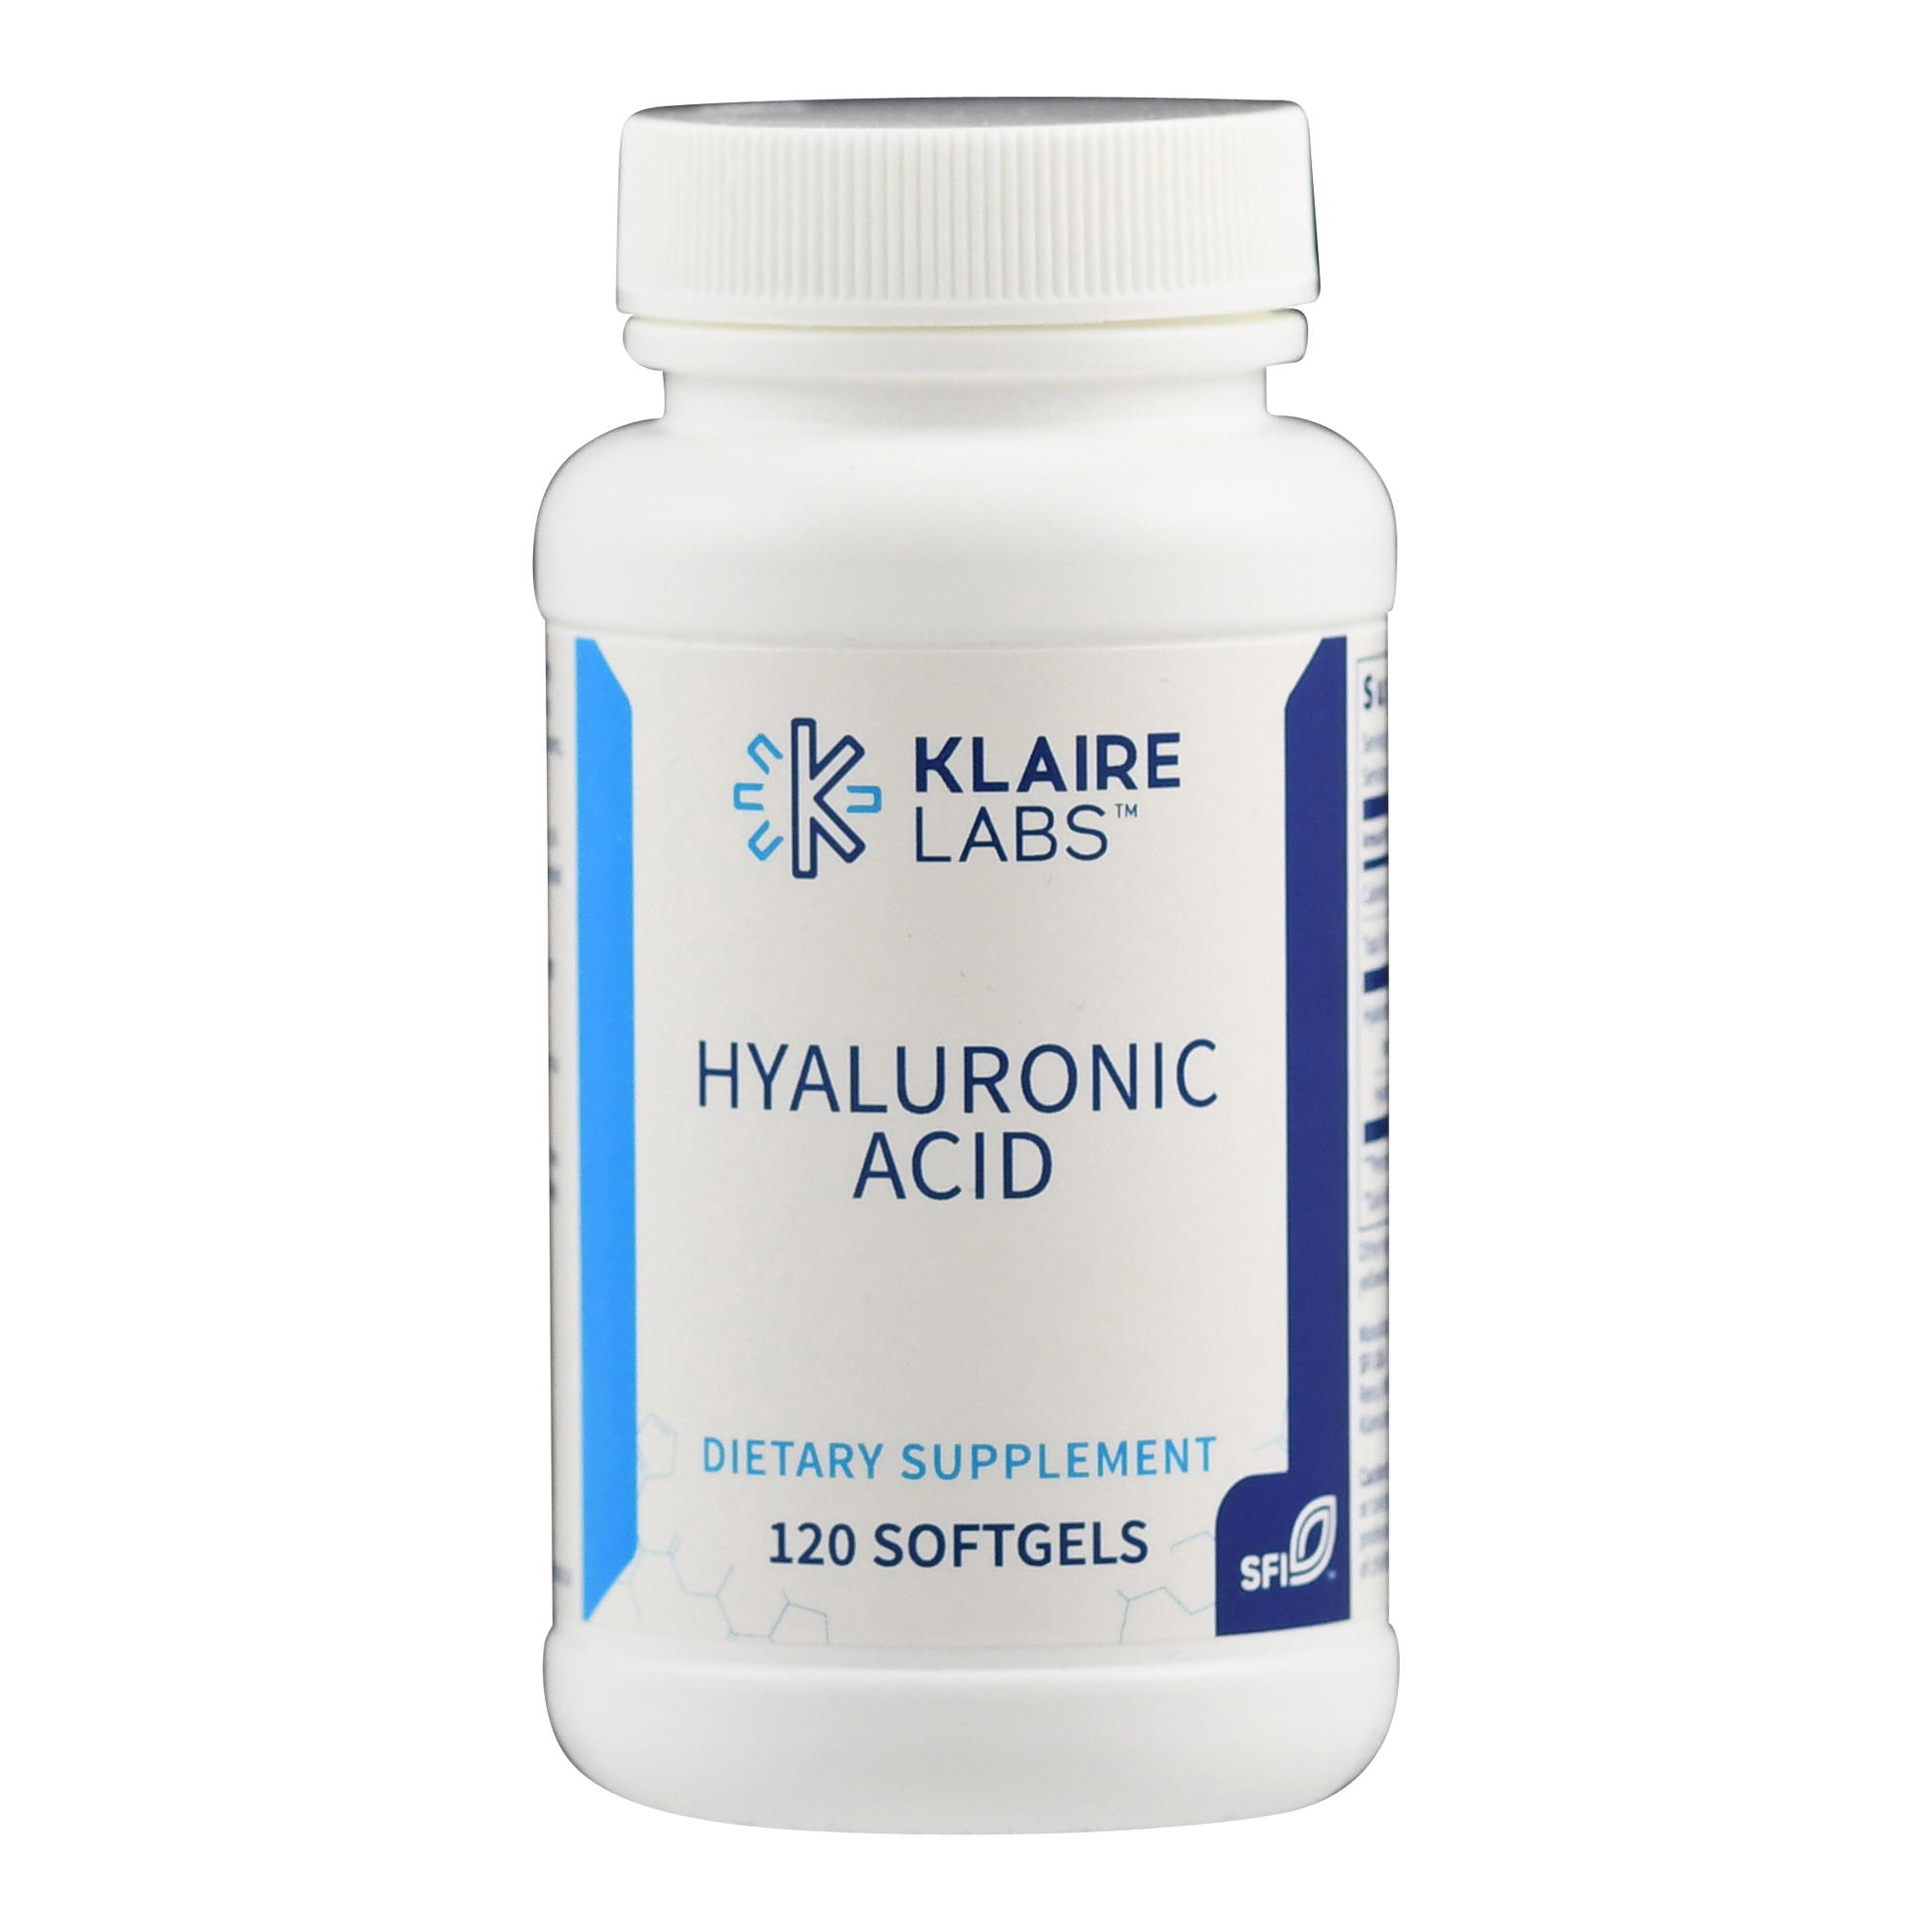 Hyaluronsäure Klaire Labs (Hyaluronic Acid) von Klaire Labs.